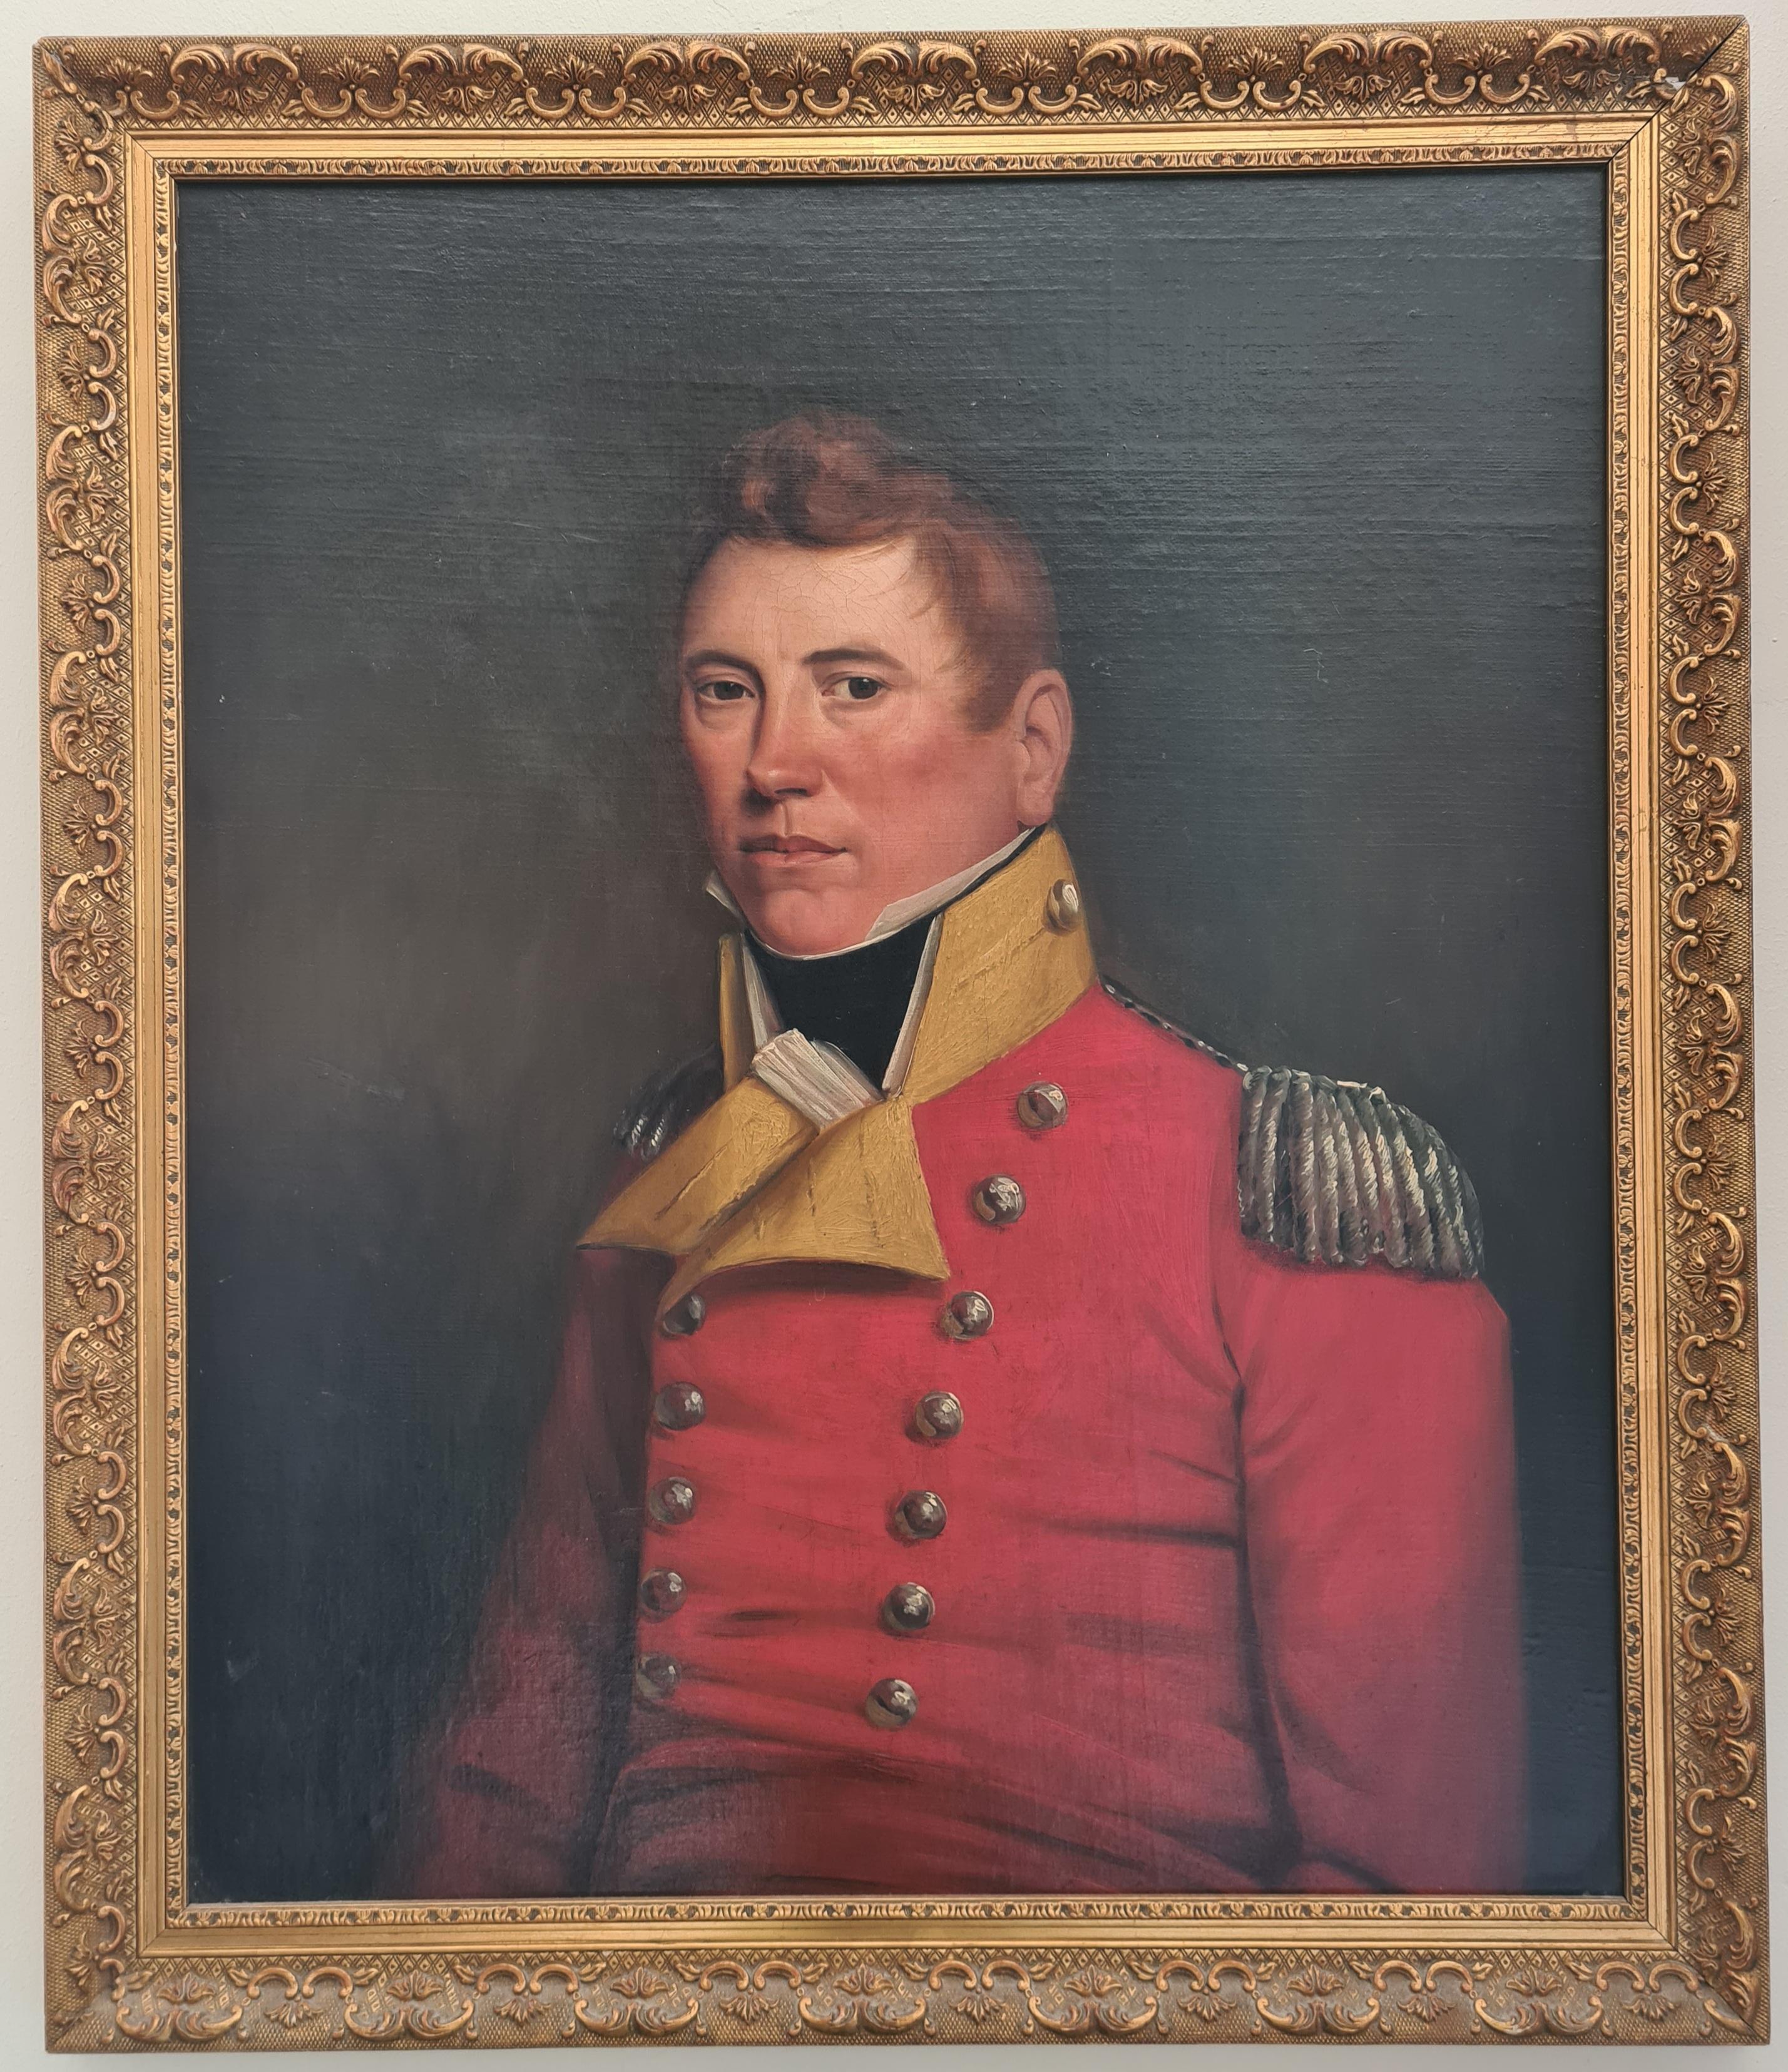 Porträt aus dem 18. Jahrhundert, Major Alexander Brown in Militäruniform